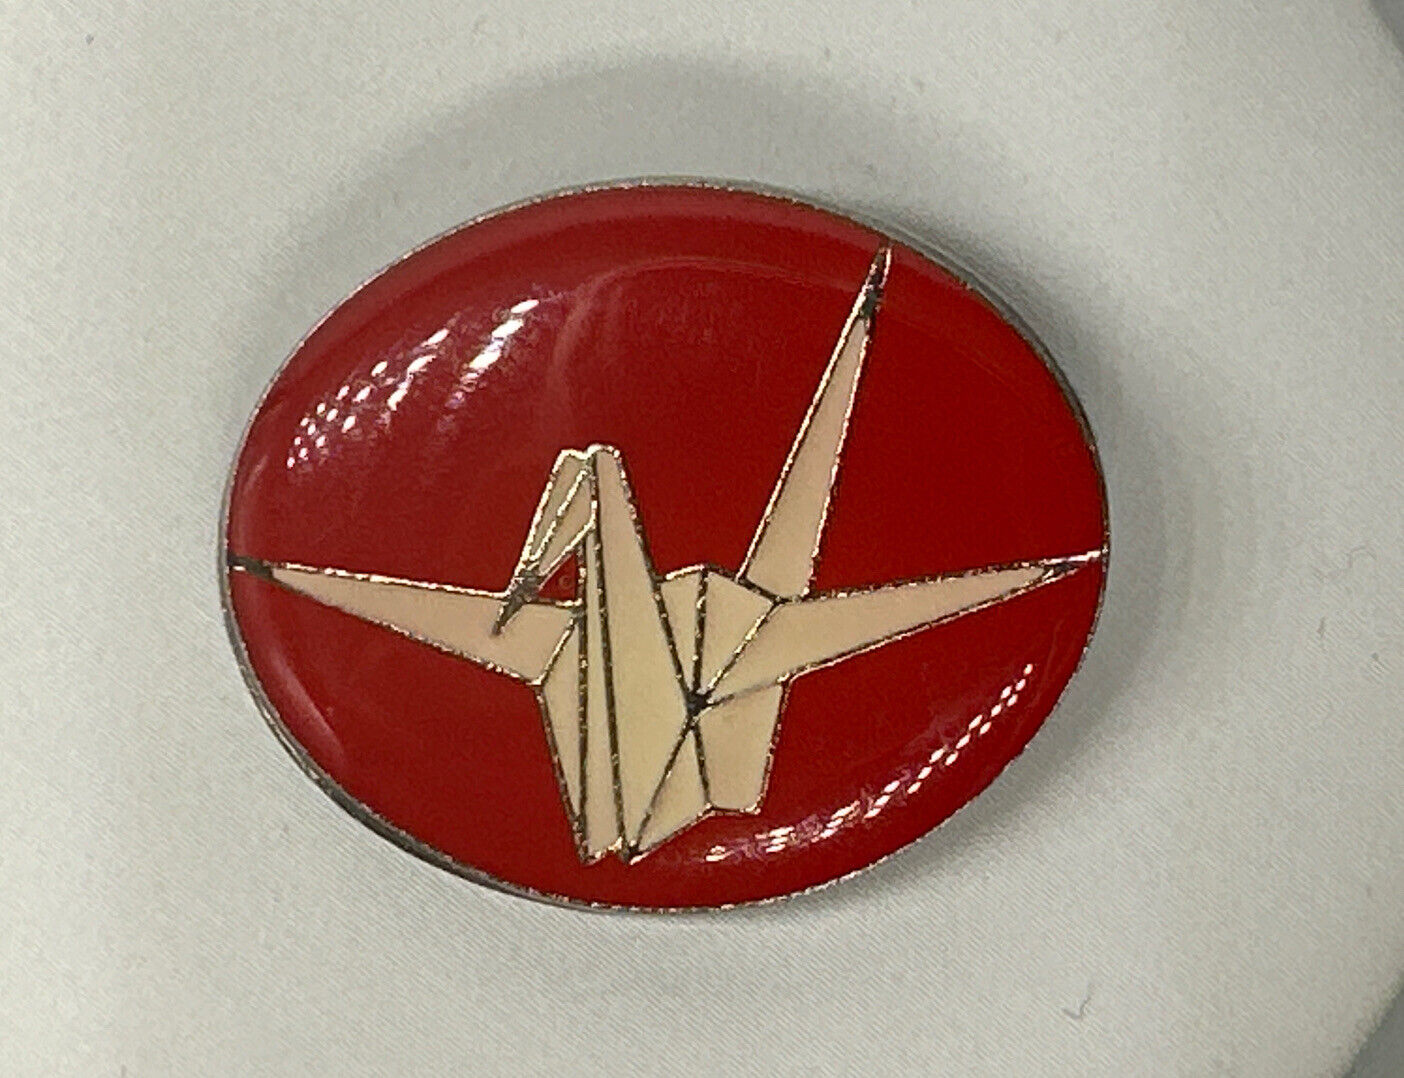 Vintage Japan “No More Hibakusha” Pin With Origami Crane, Post WWII Peace Symbol